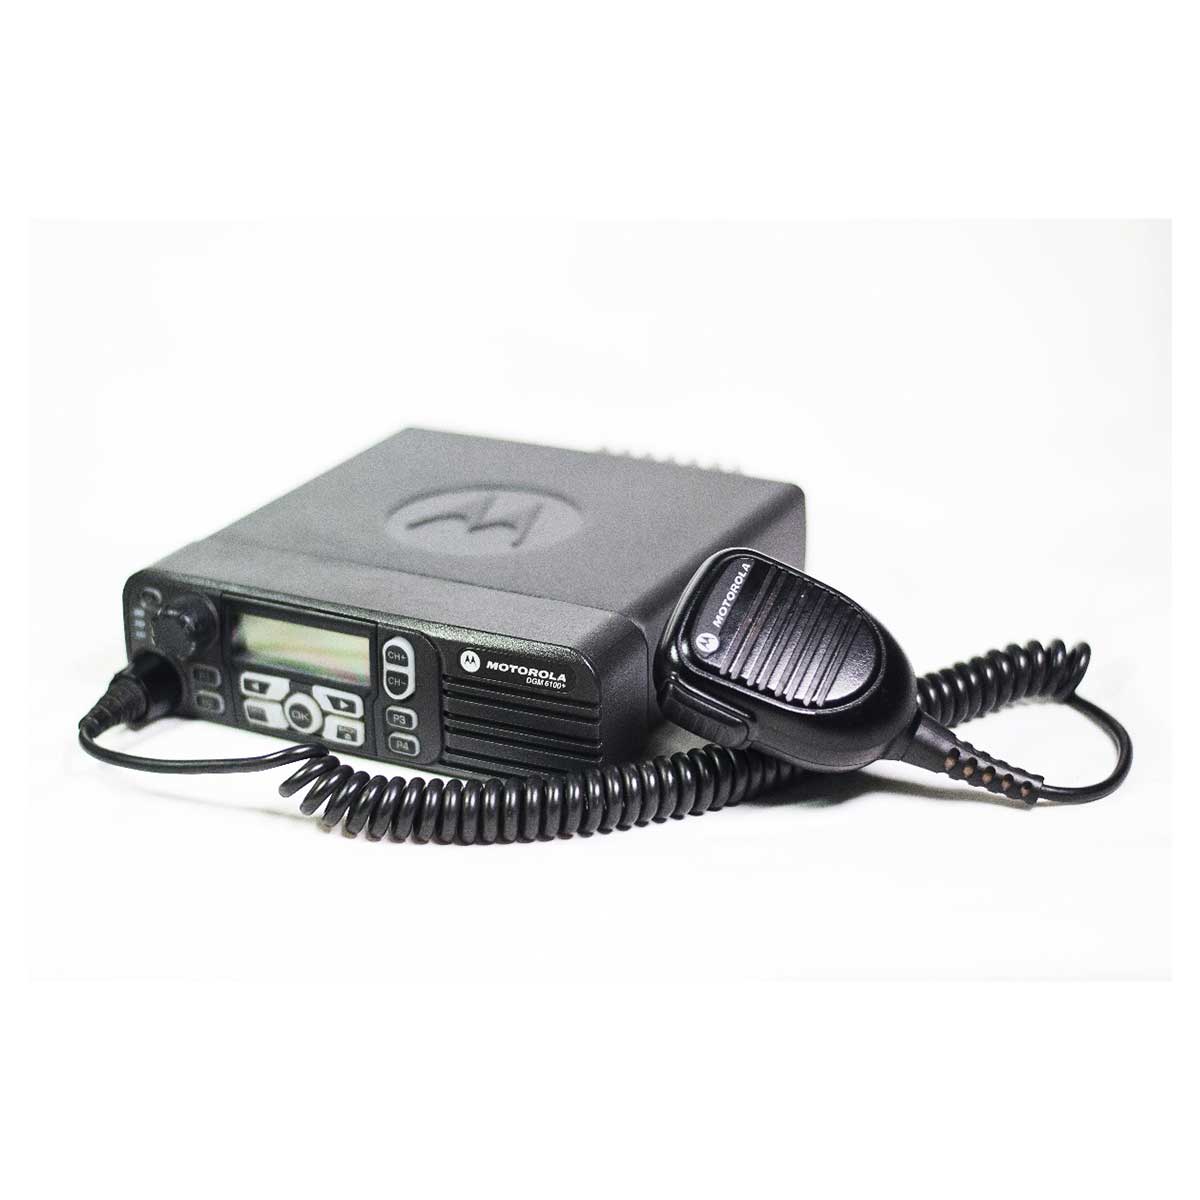 Radio Motorola DGM6100 Digital LAM27QDH9LA1AN LAM27QDH9LA1AN UHF 403-470 MHZ